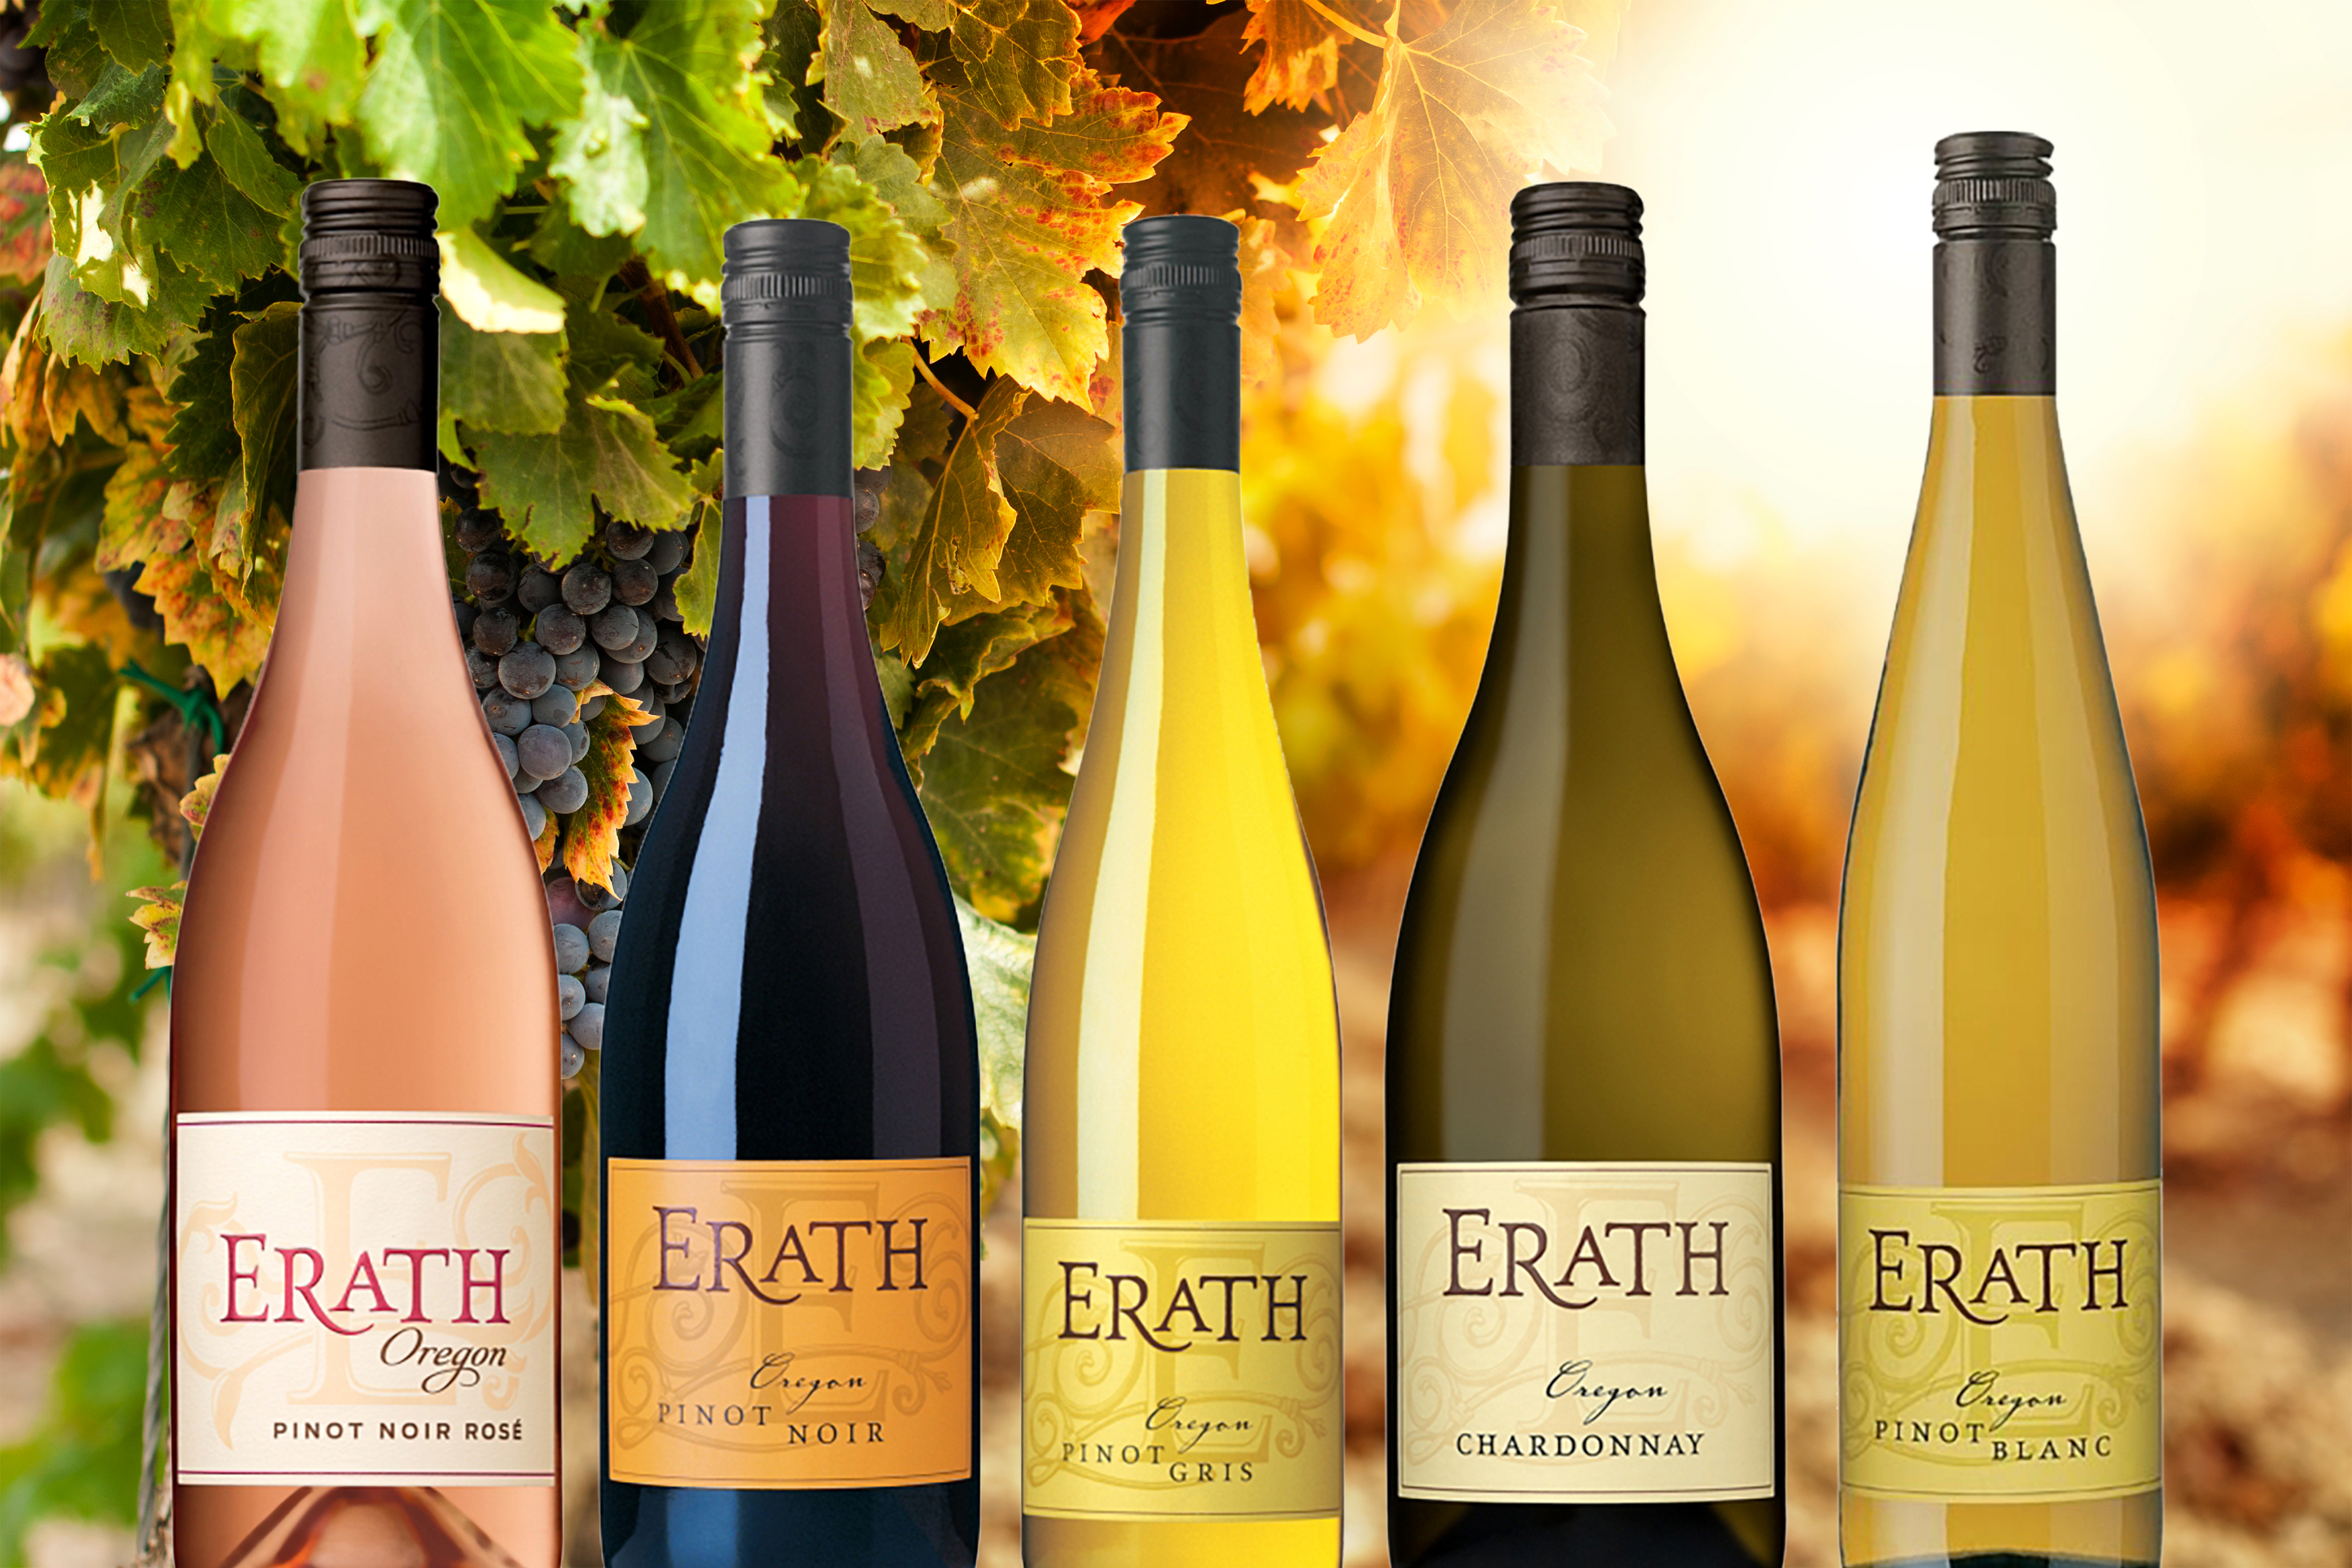 Erath Winery Tasting Room Willamette Valley wine tour and wine tasting